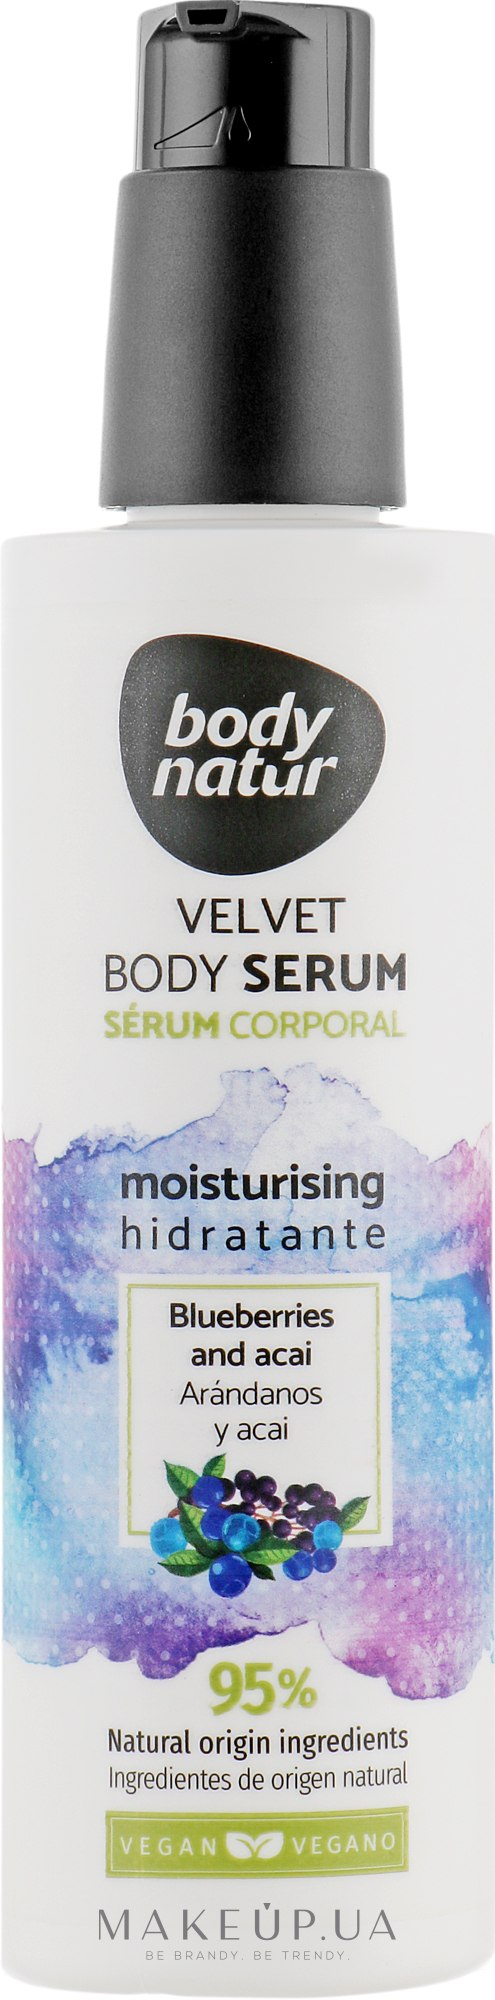 Бархатистая сыворотка для тела с голубикой и асаи - Body Natur Blueberries and Acai Velvet Body Serum  — фото 200ml